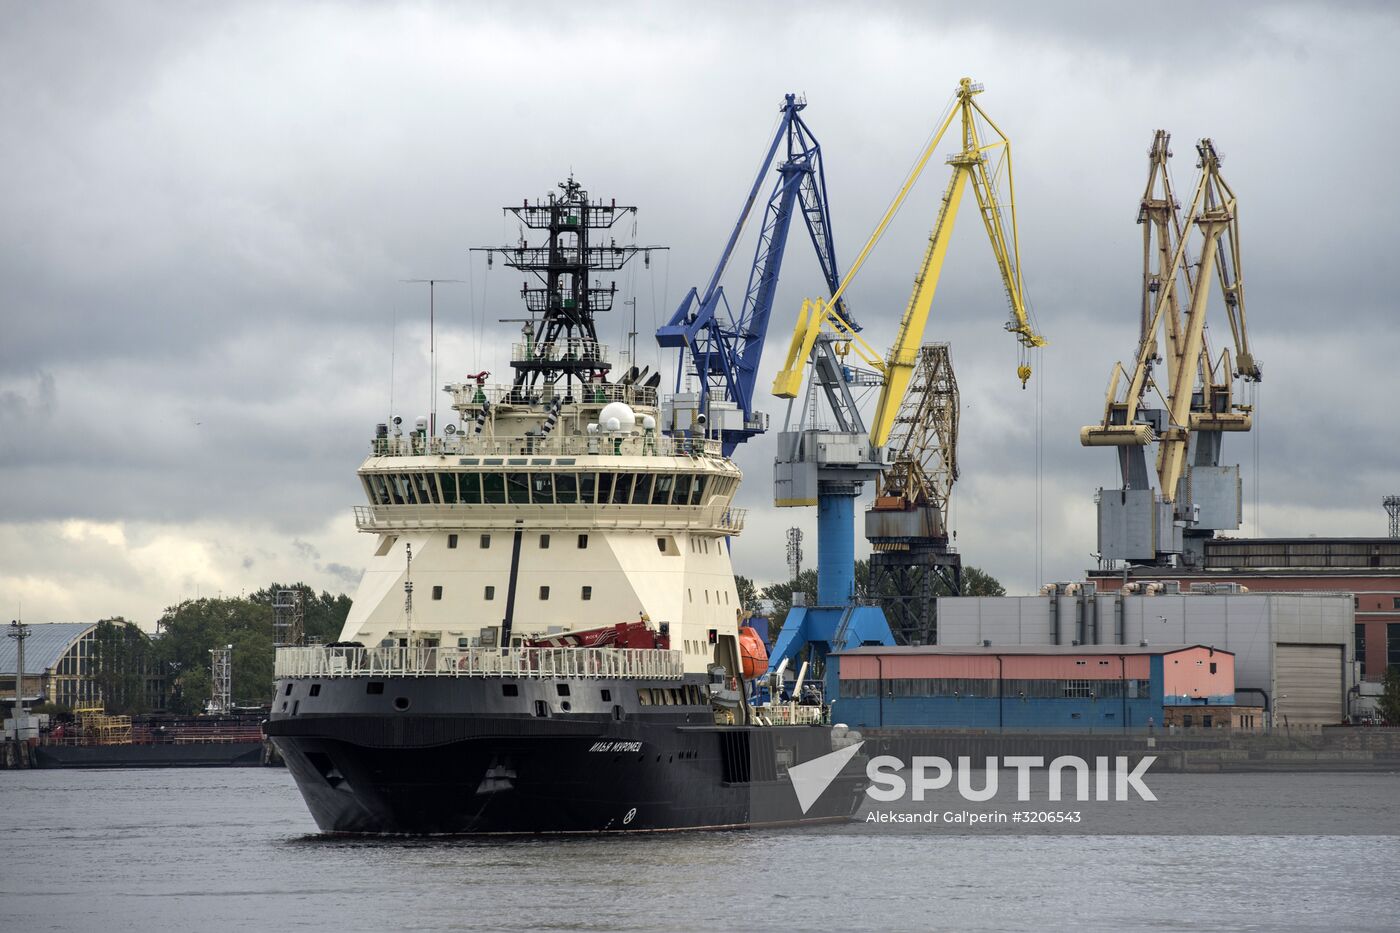 The Ilya Muromets icebreaker on official tests